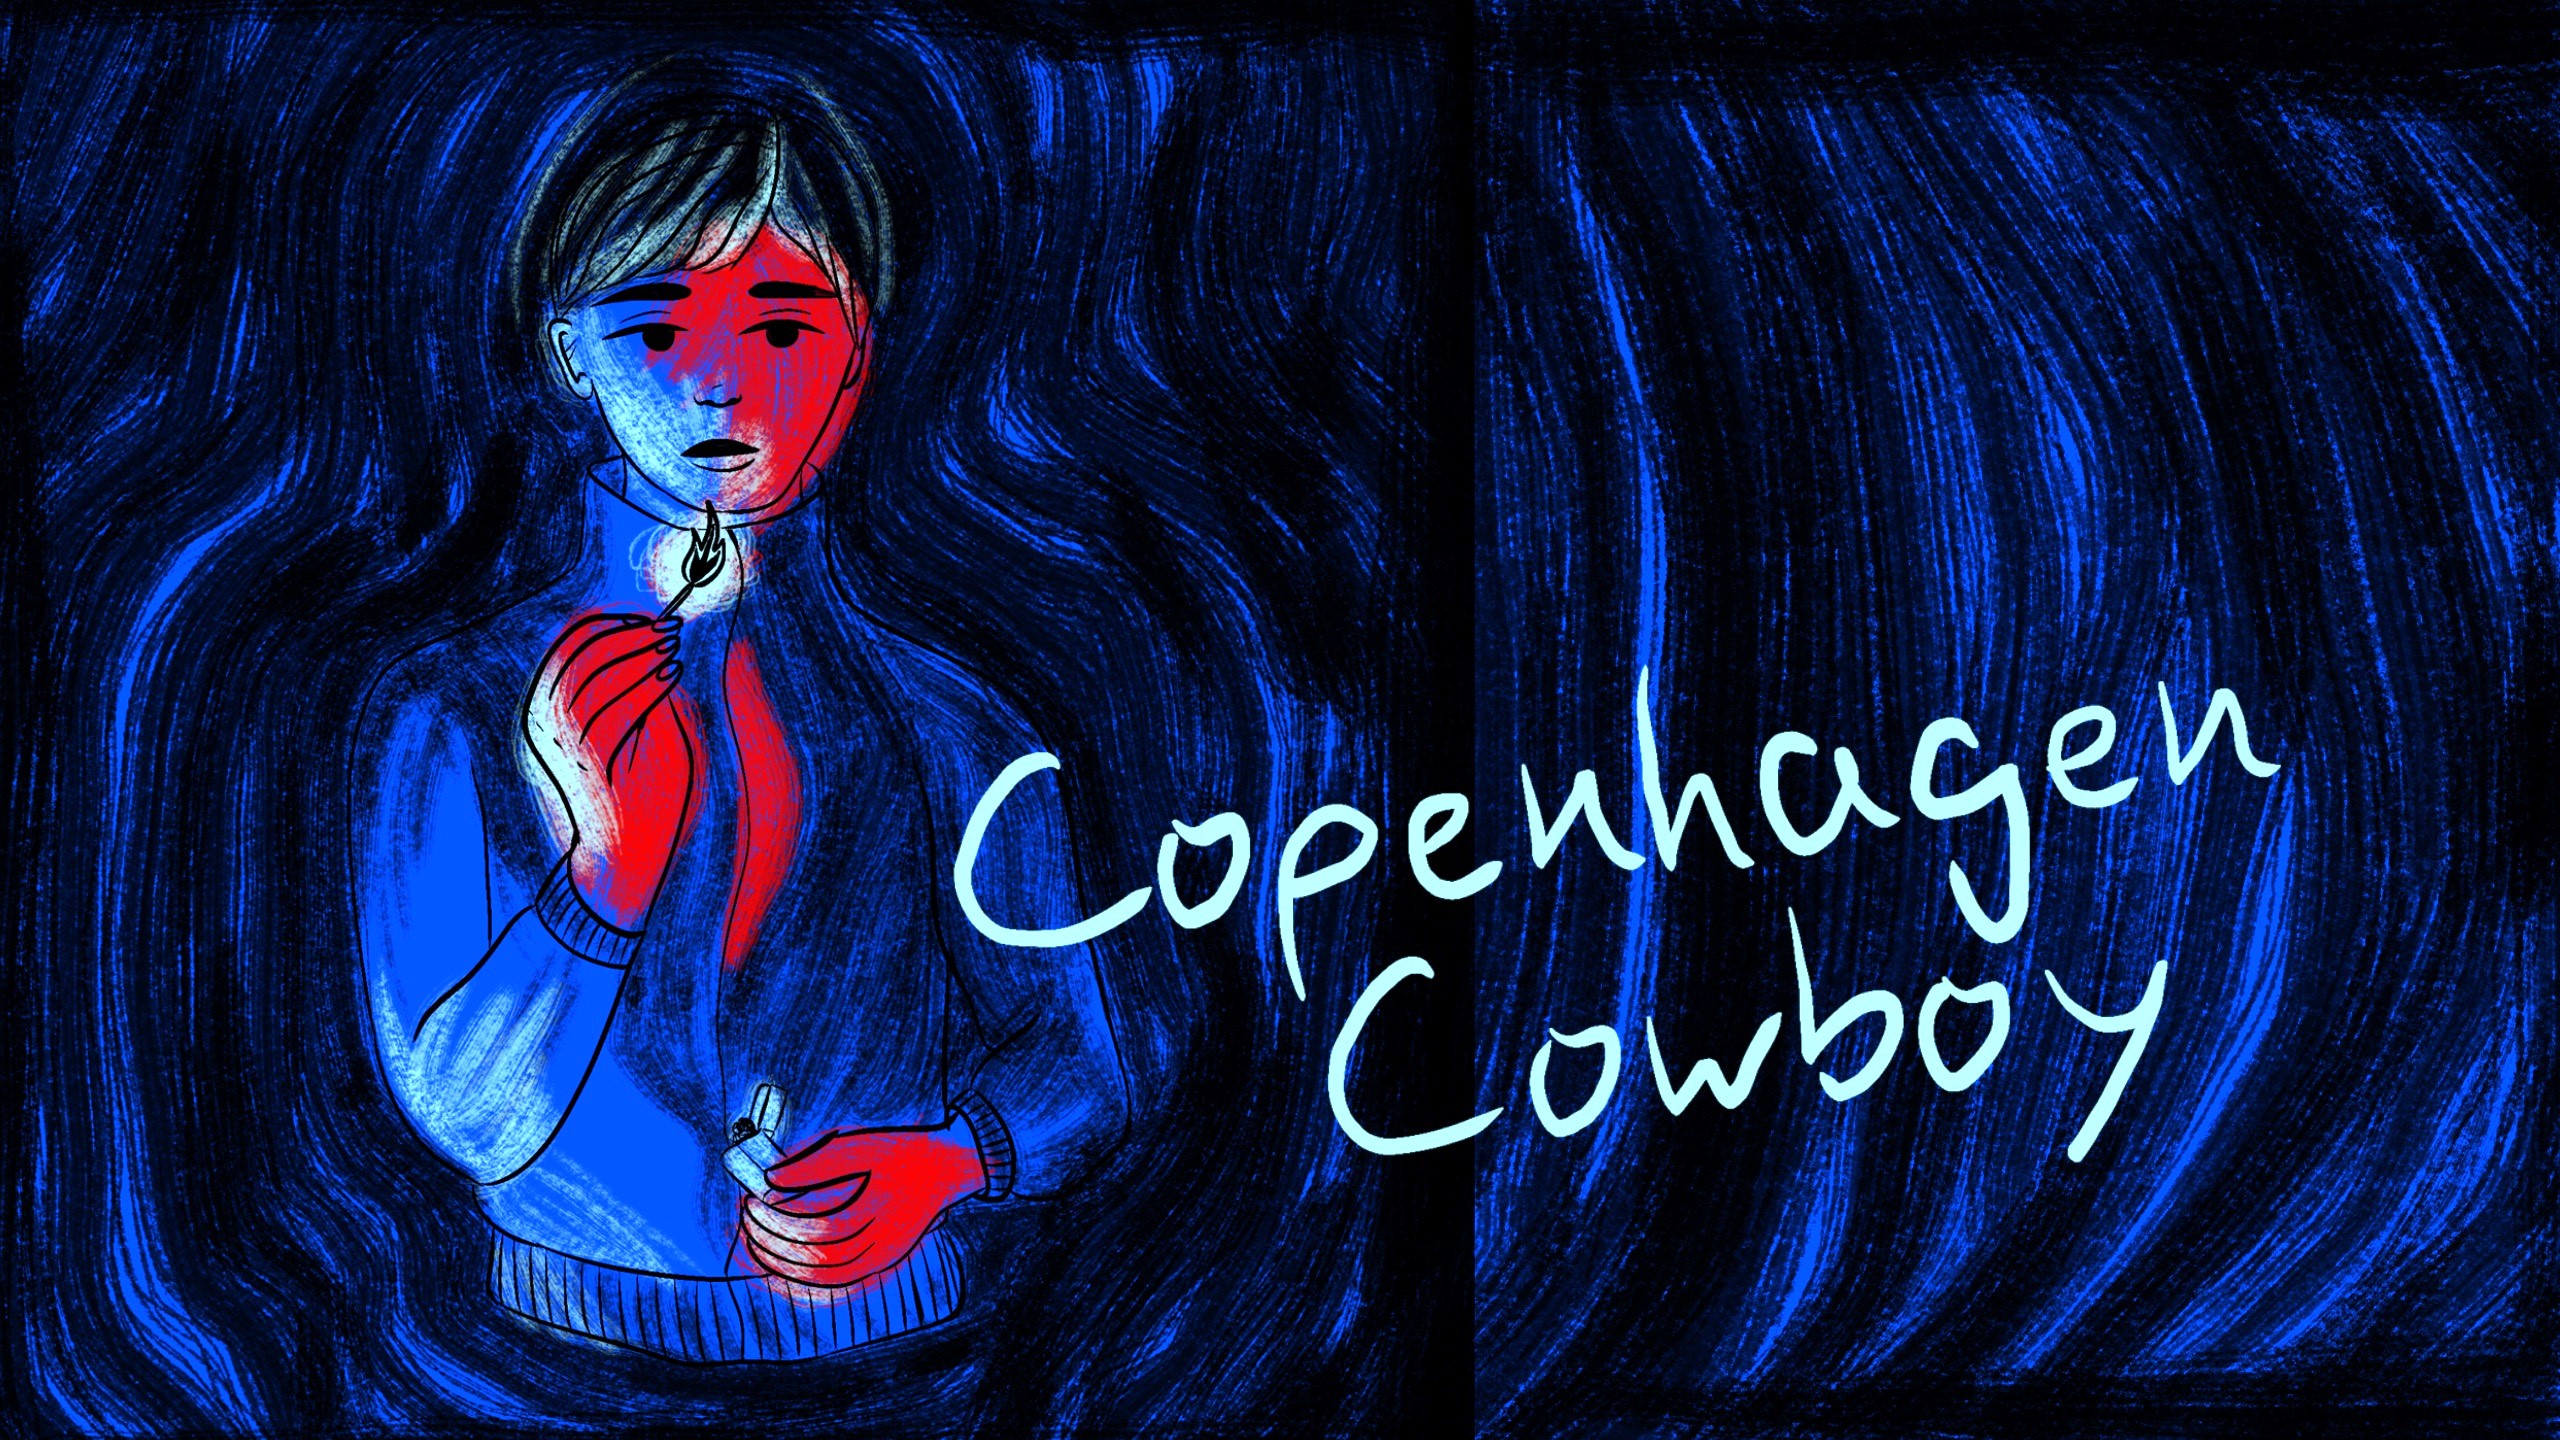 Recensione: “Copenhagen Cowboy” di NWR